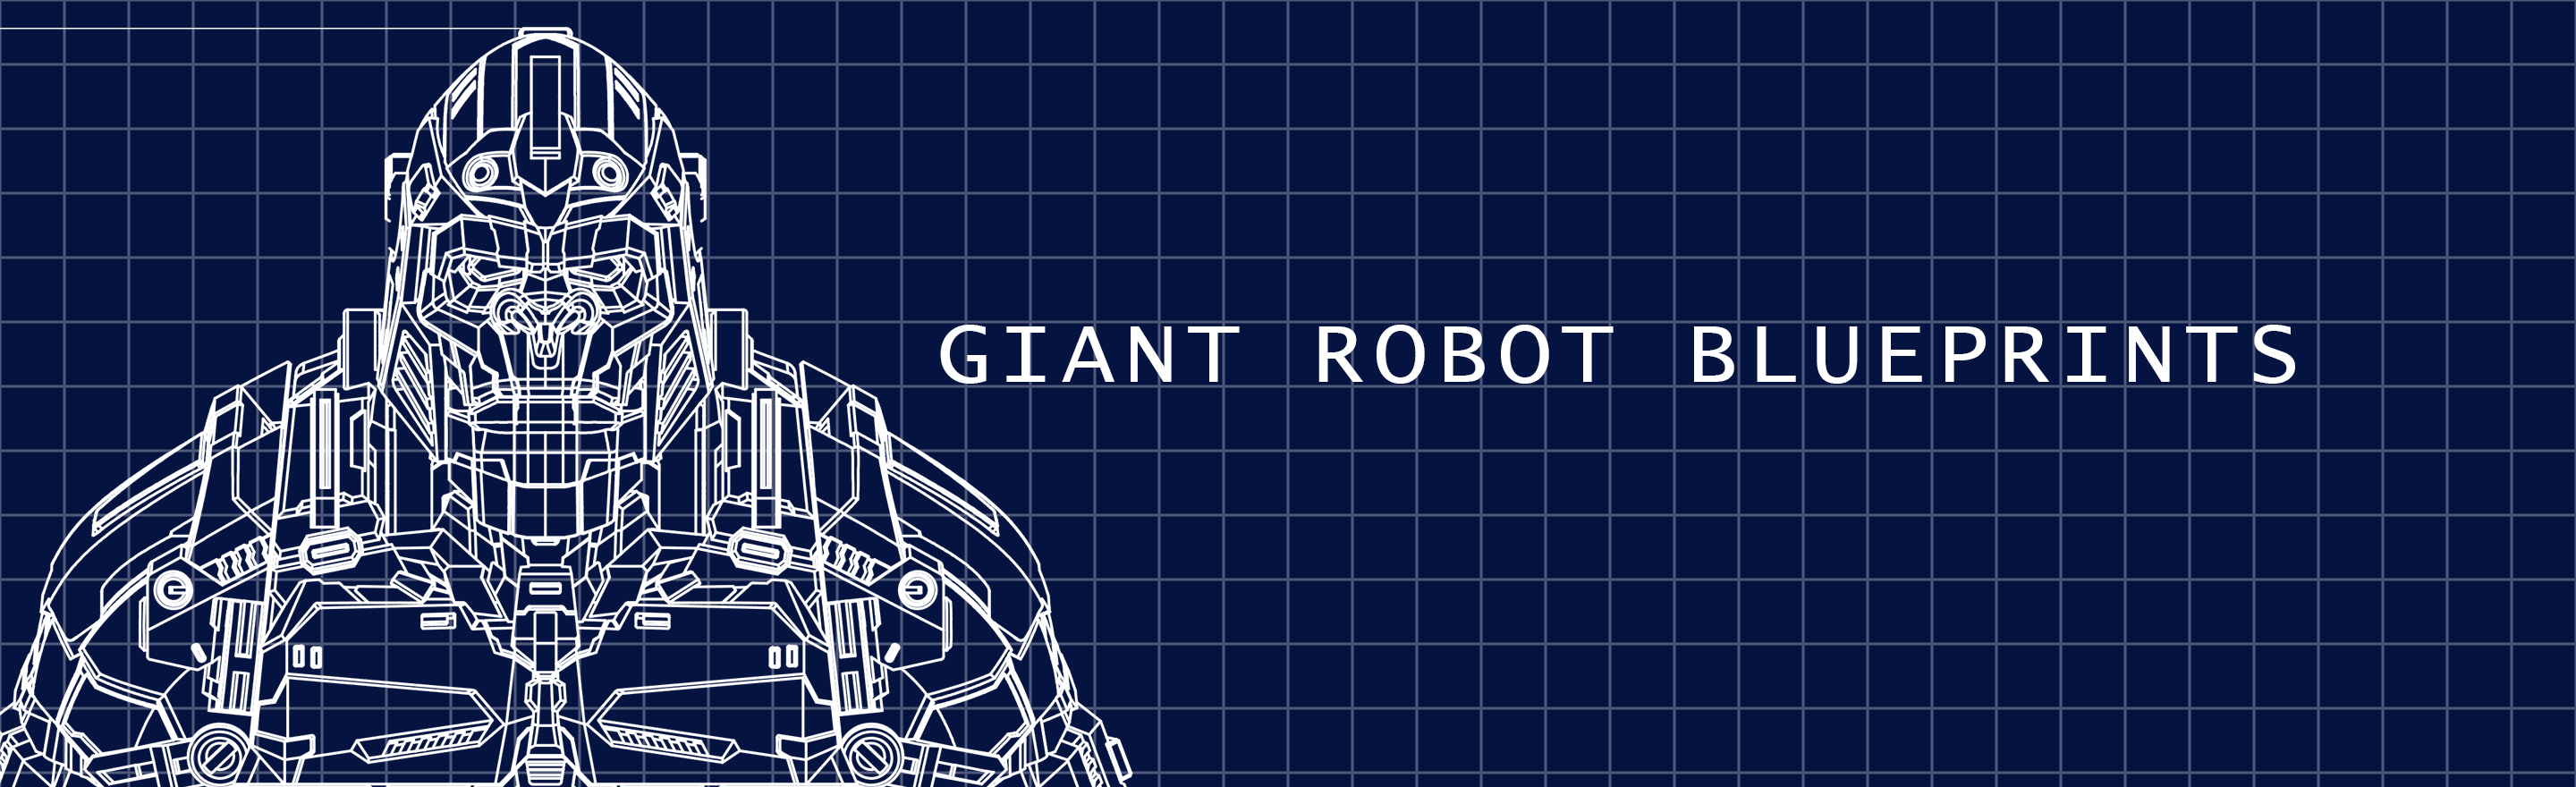 Giant Robot Blueprints